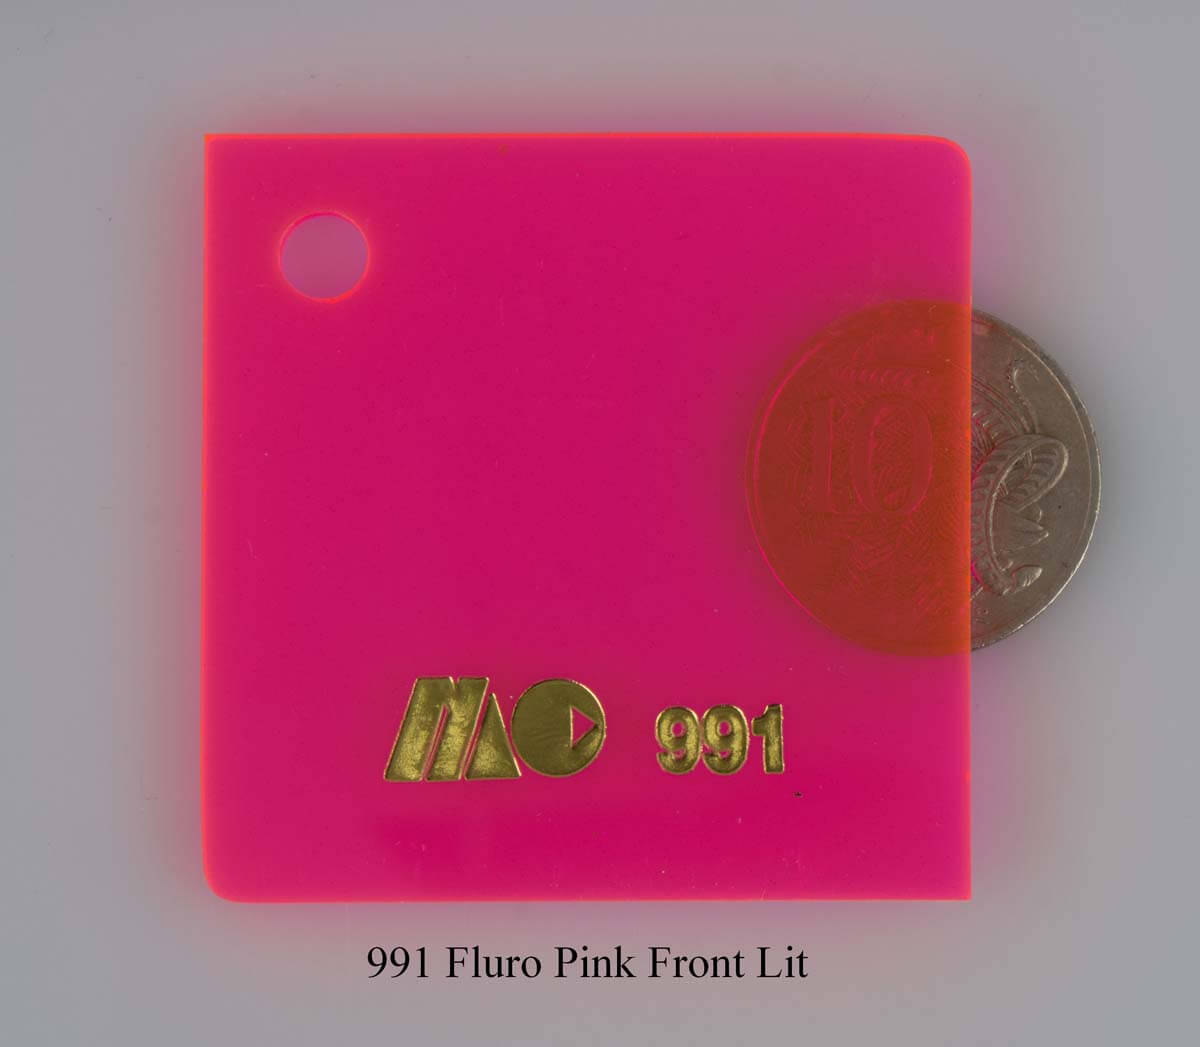 991 Fluro Pink Front Lit